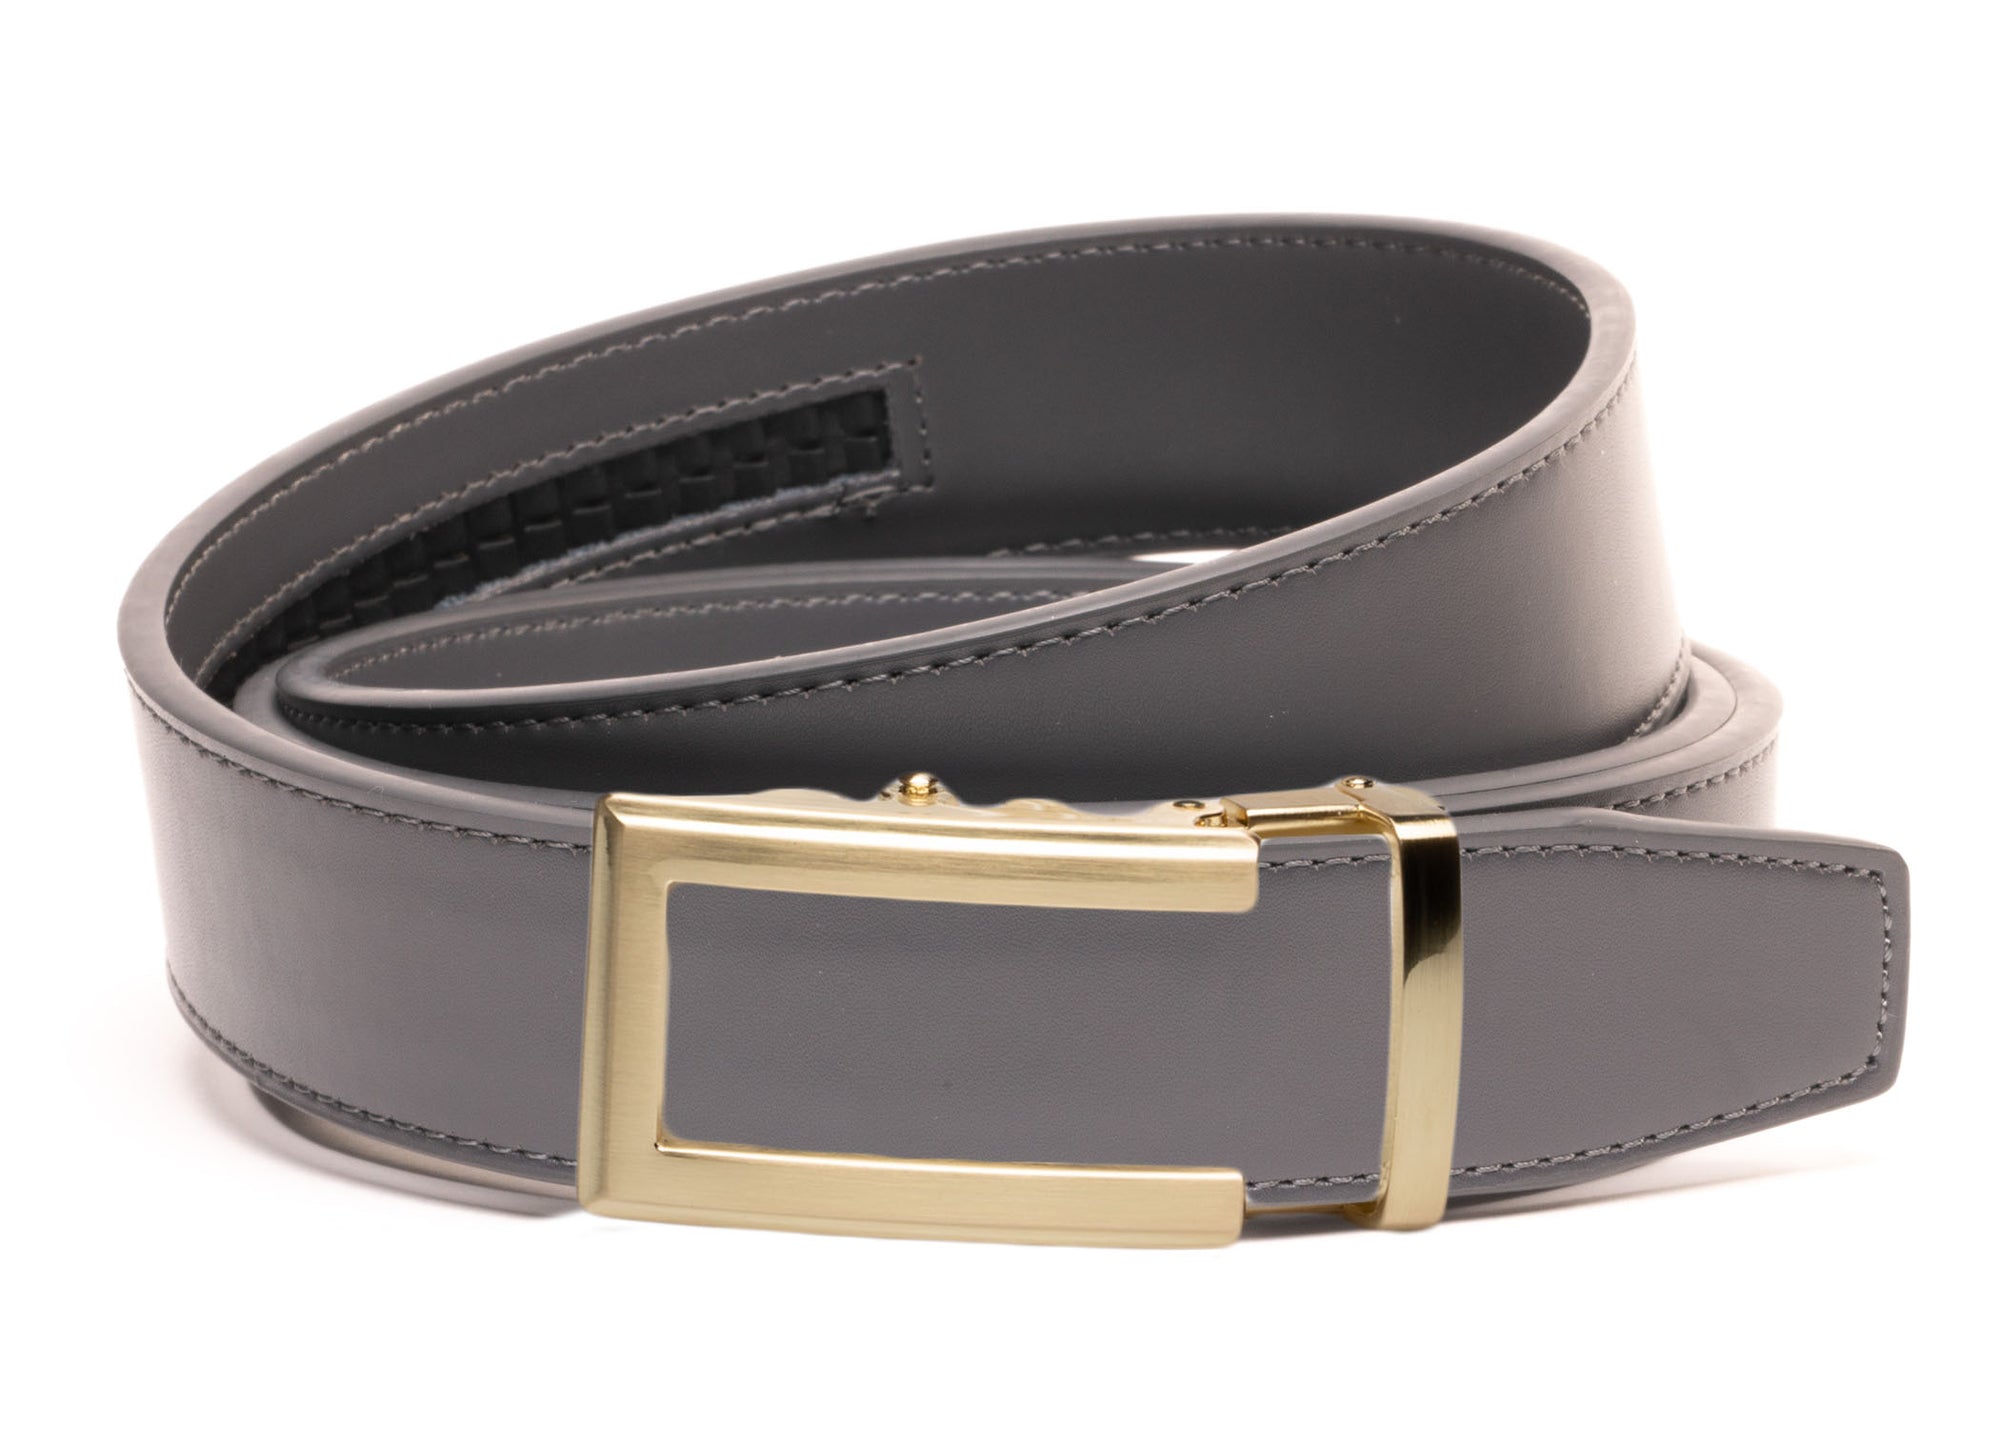 Golf Belts Series By Railtek  Ratchet Style - Ratchet Belts & Buckles -  Railtek Ratchet Belts - Railtek Belts